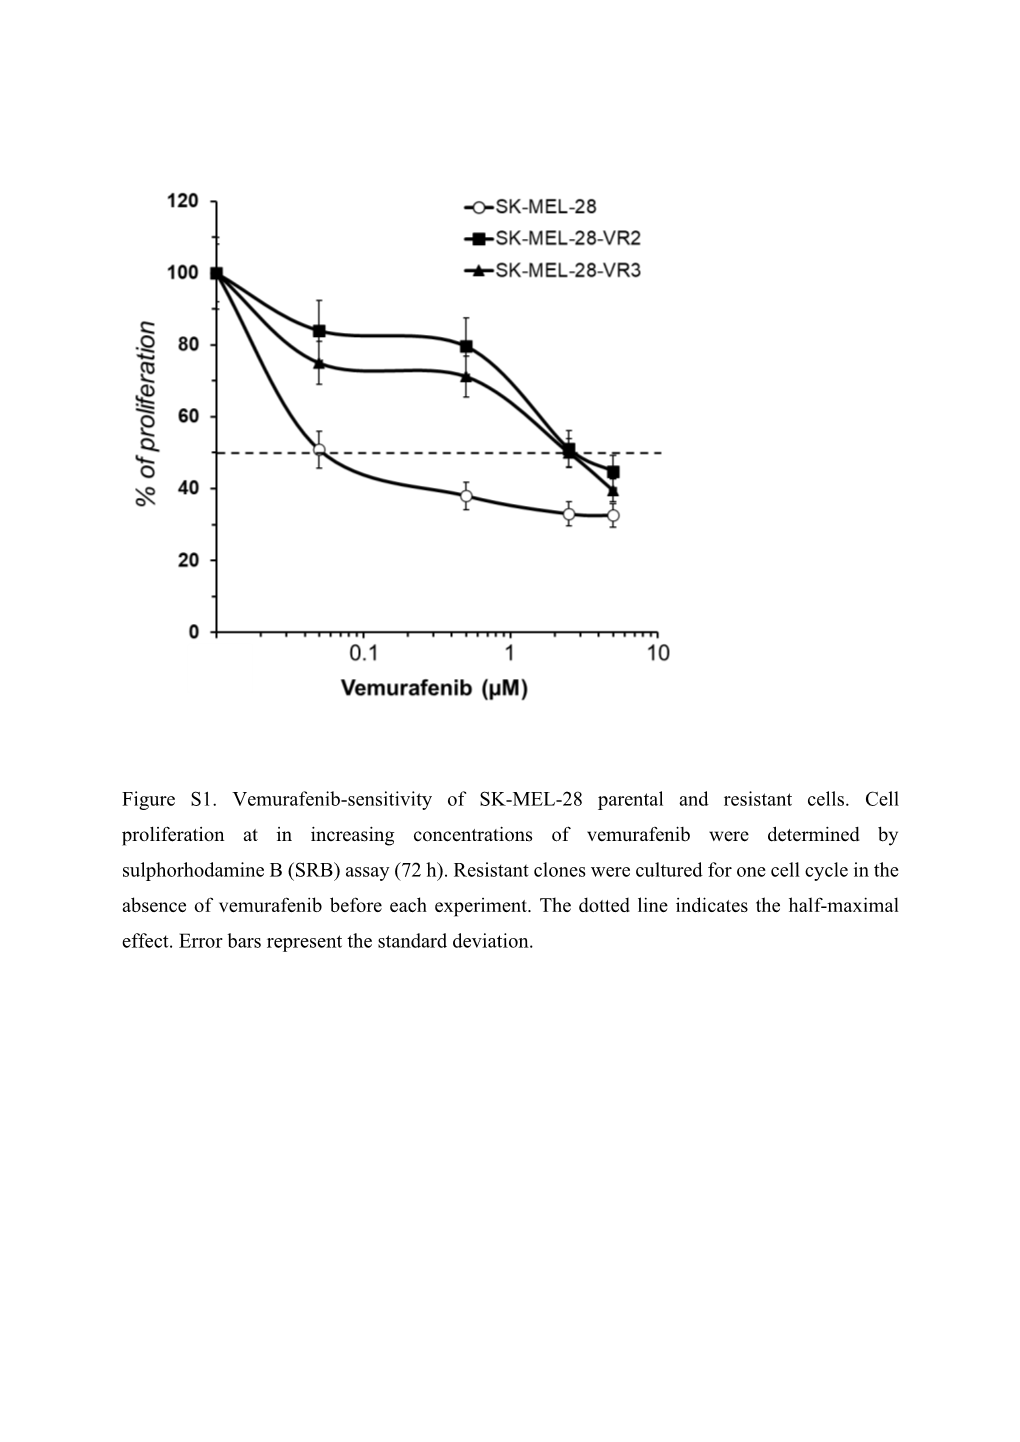 Figure S1. Vemurafenib-Sensitivity of SK-MEL-28 Parental and Resistant Cells